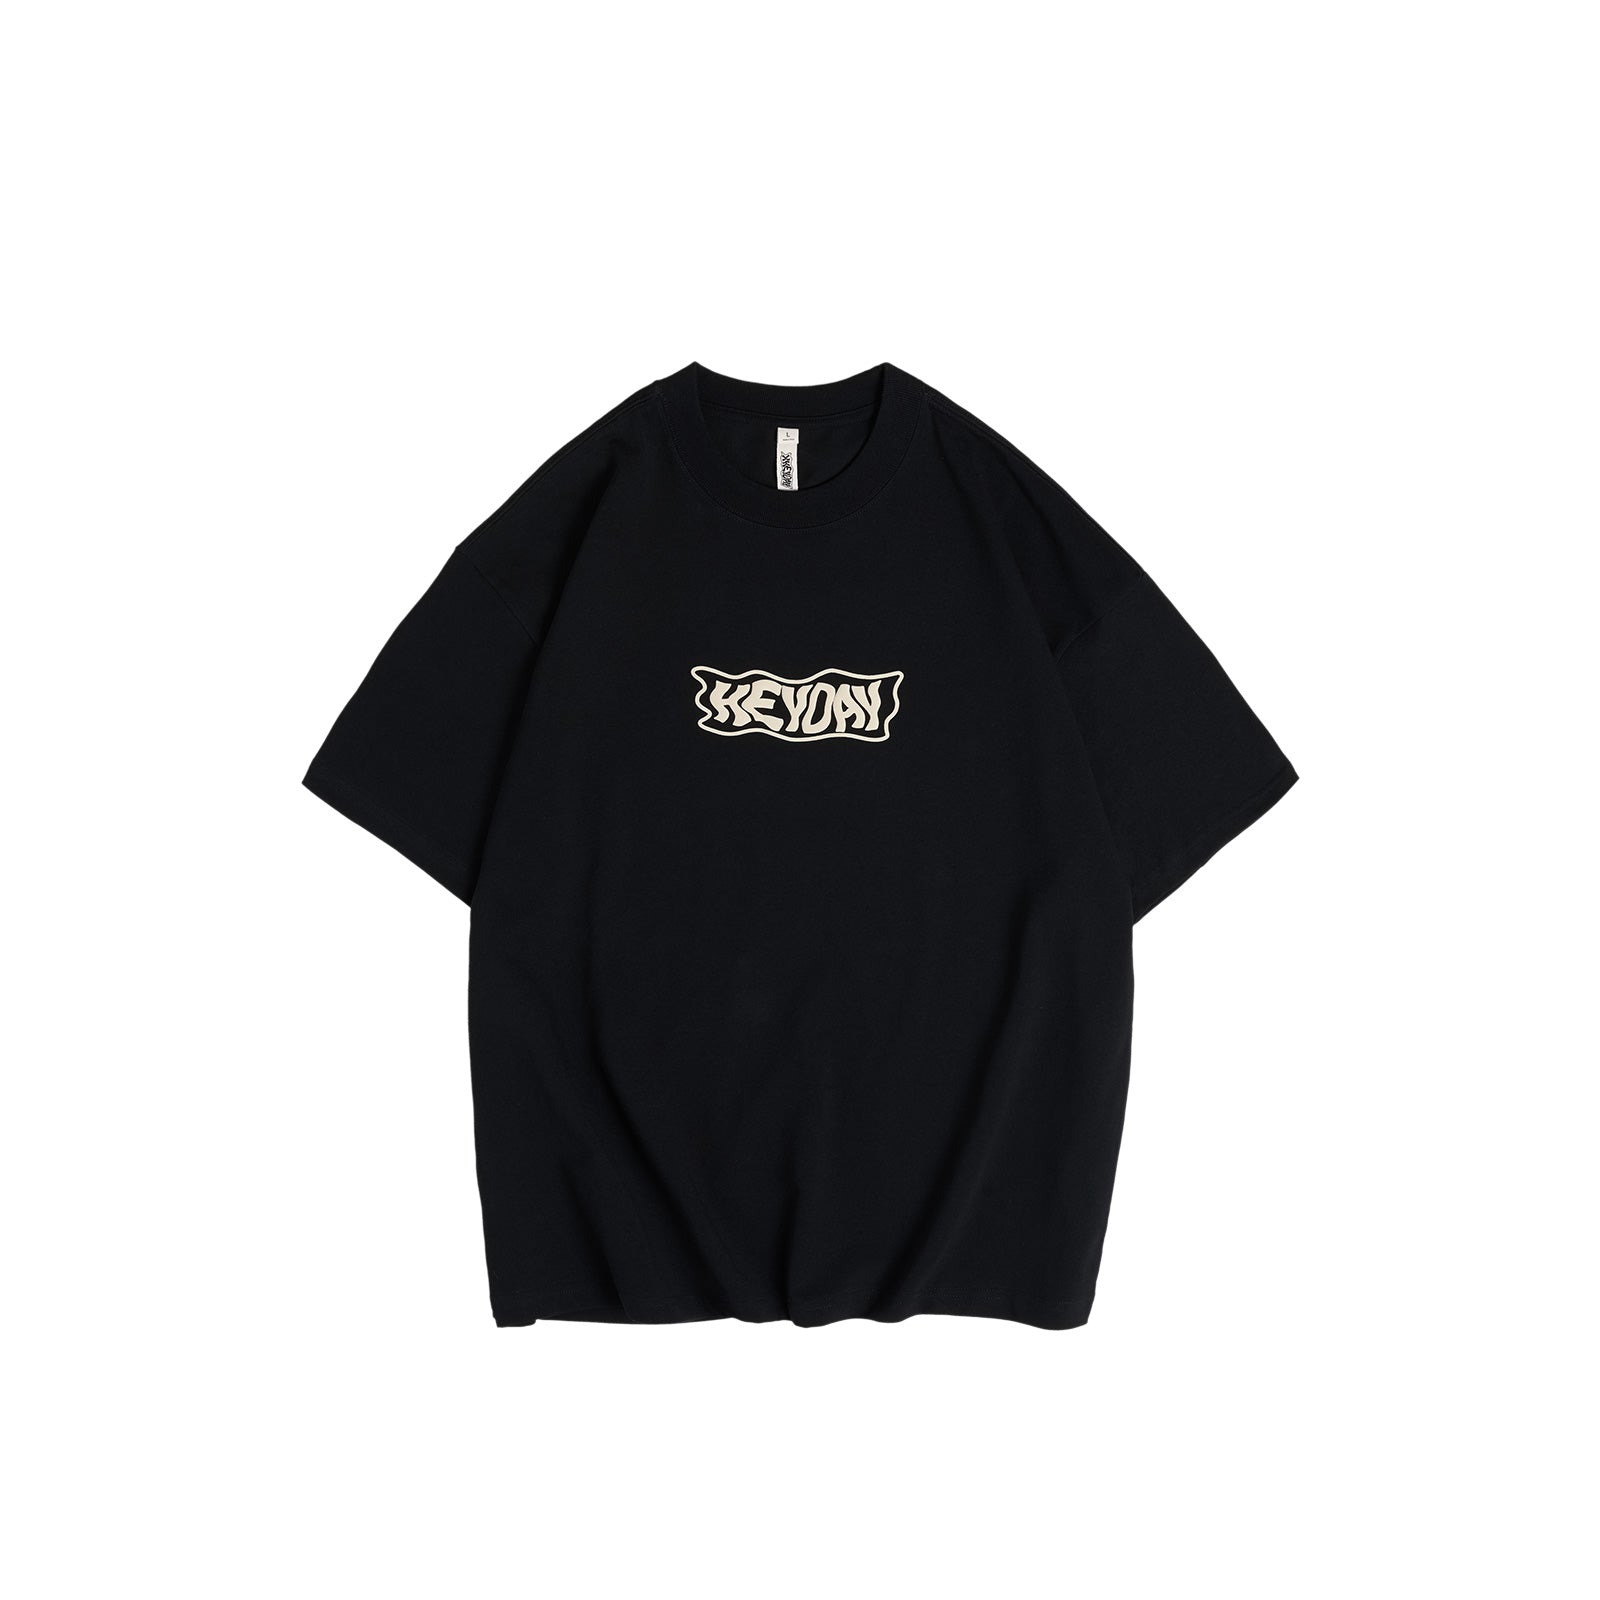 XHEYDAY Black Printed T-Shirt